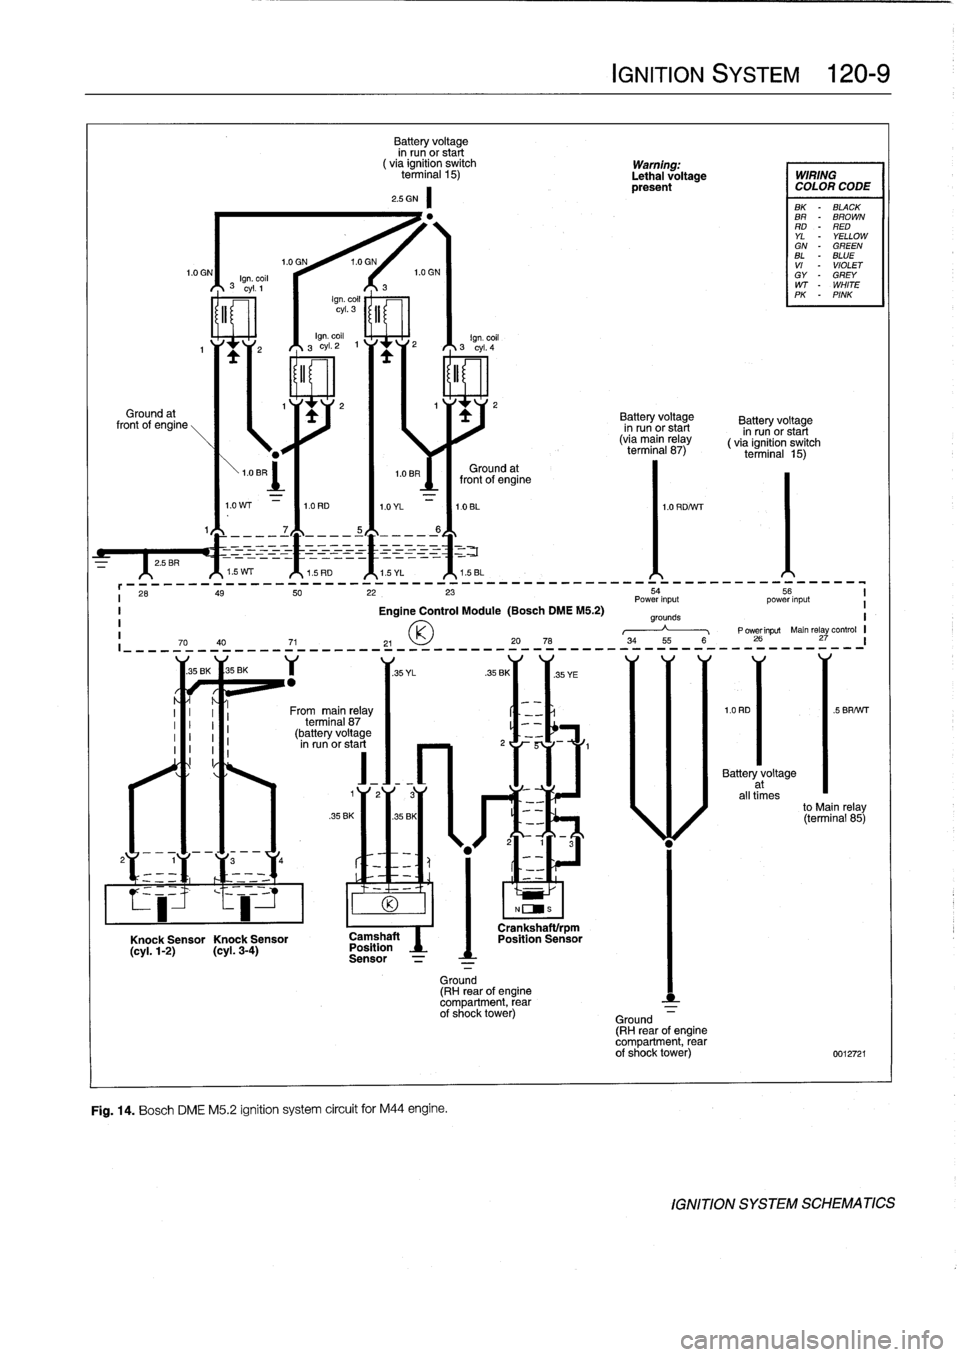 BMW 318i 1997 E36 Workshop Manual 
^1
.5WT
^1
.5RD
^1
.5YL
^1
.5BL
r

	

--__

	

____-

	

__-_

	

___-_

	

-___-_____--__--

	

-____-___

	

____-
i
26
g
5022
23

	

54

	

5

I

	

Power
input

	

power
input
I

	

Engine
Contro